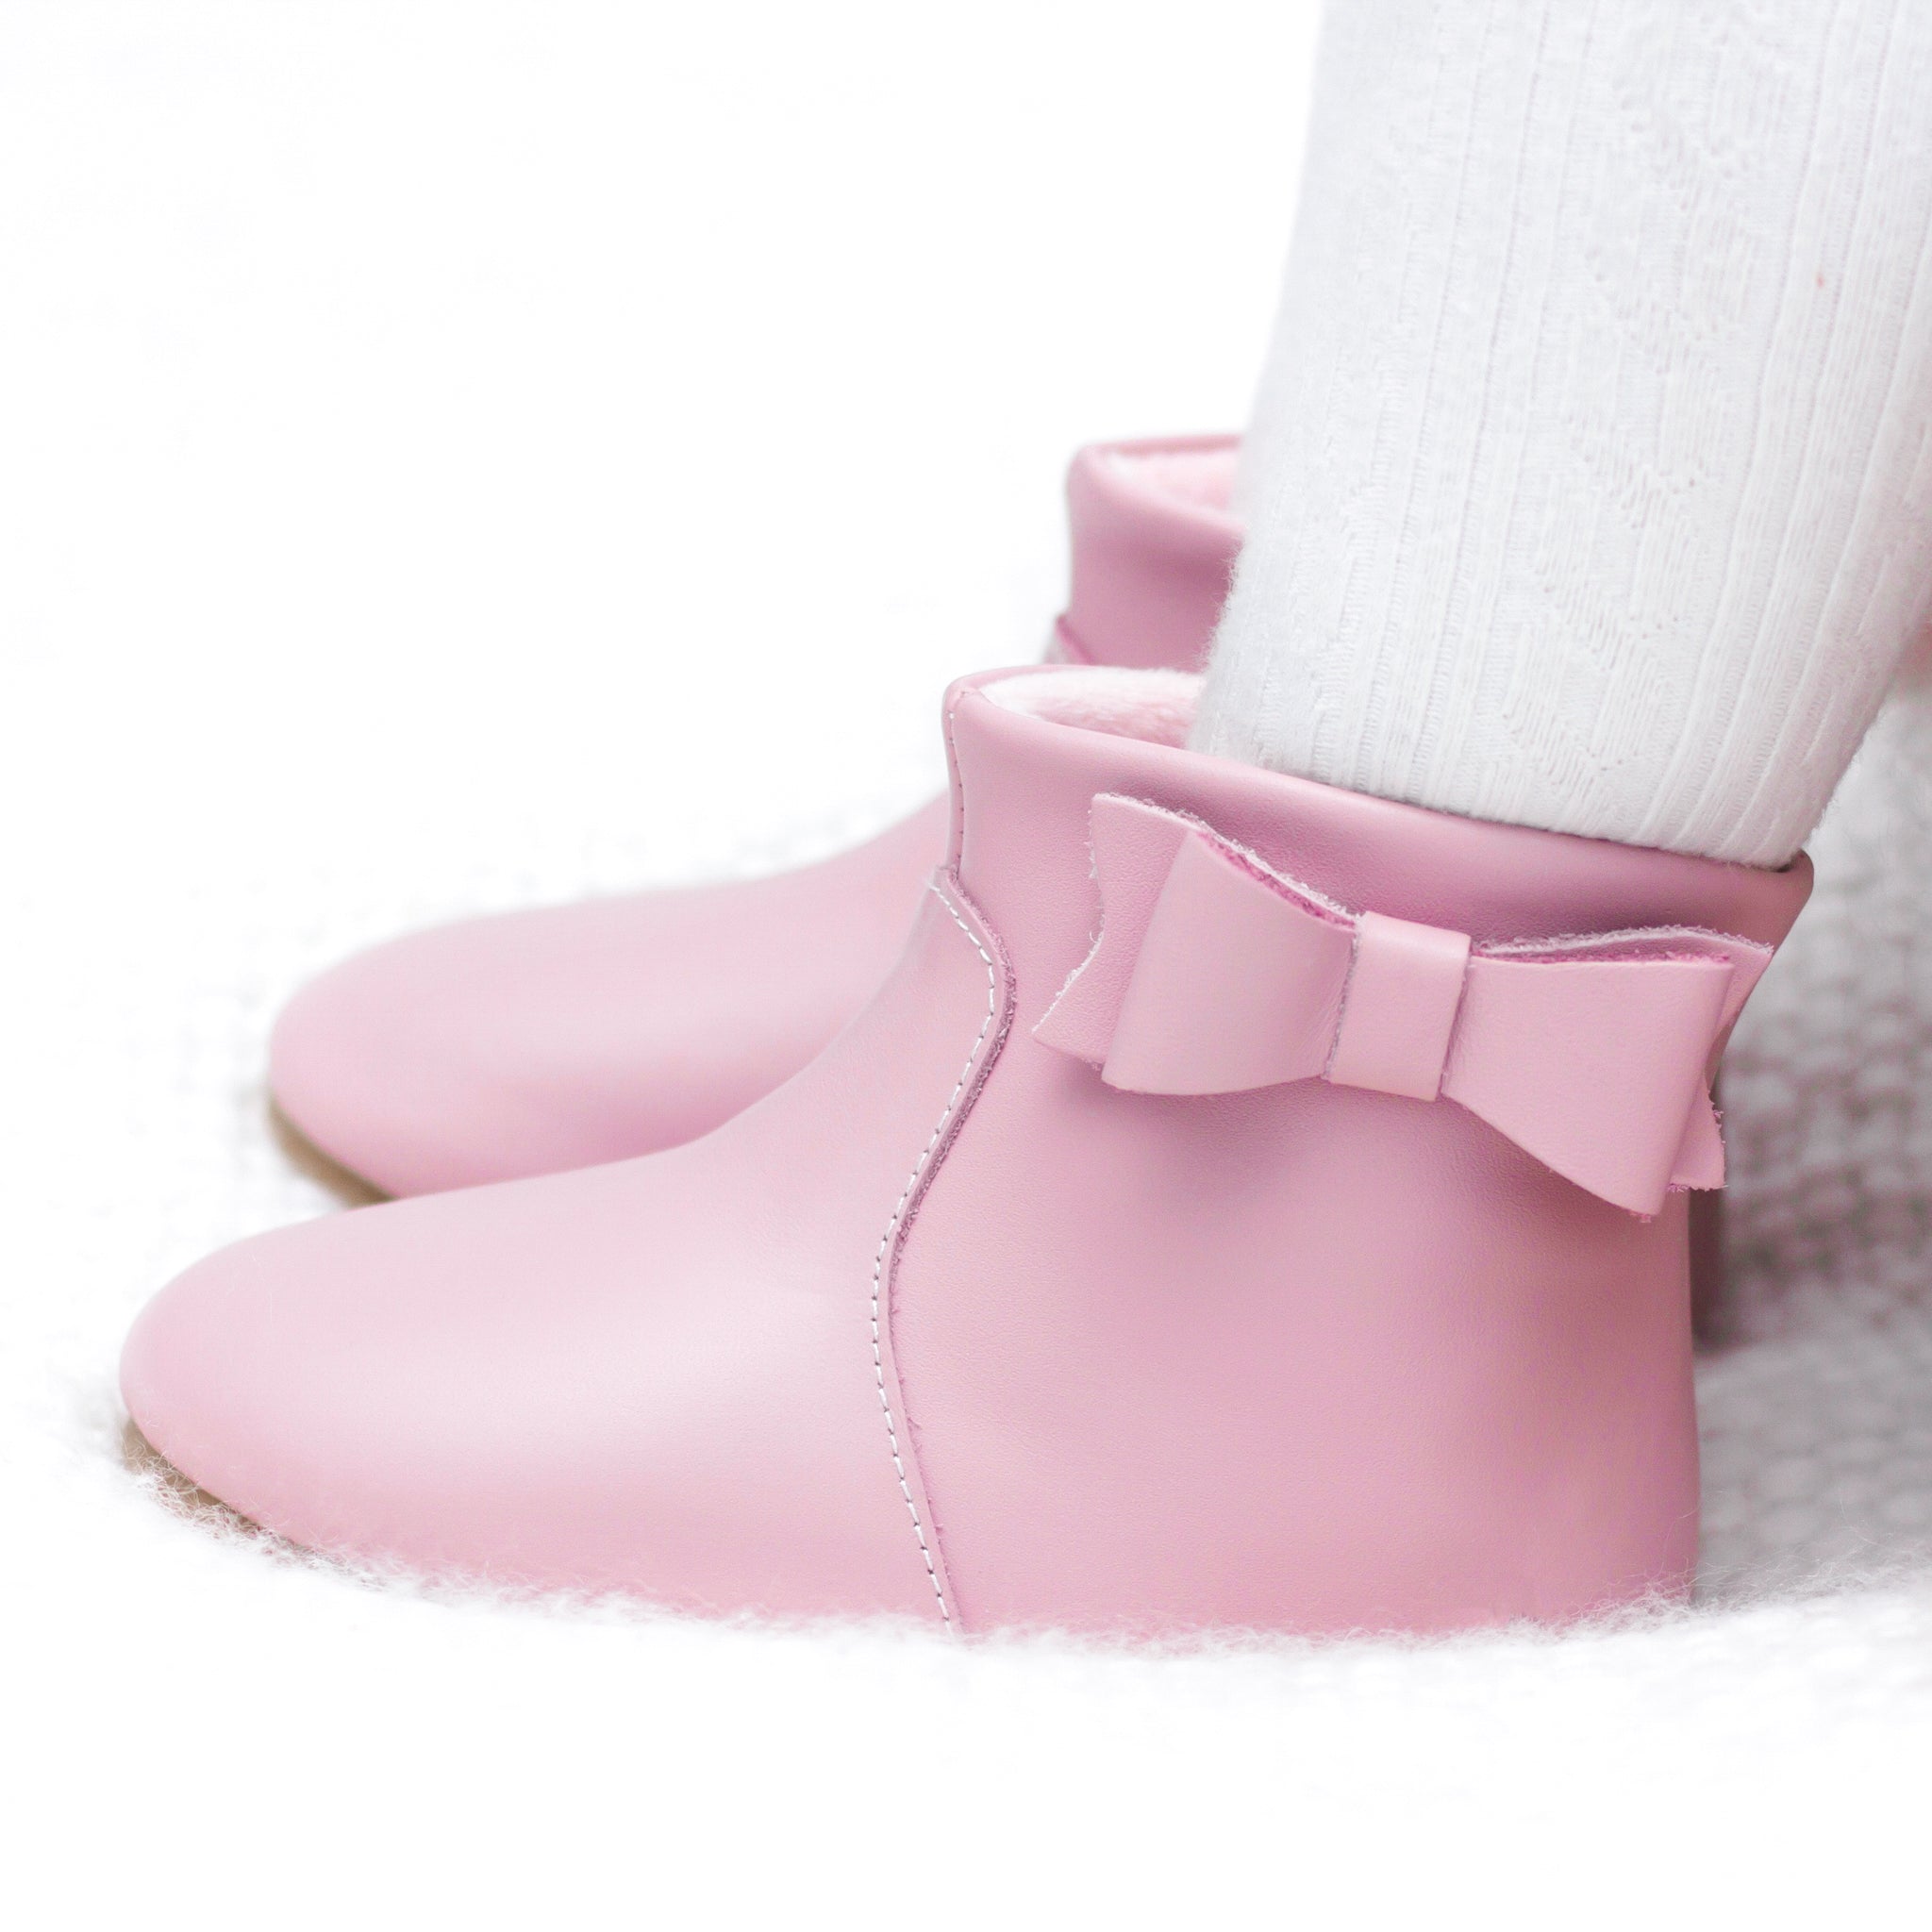 Ankle Boots - Lavender Rose